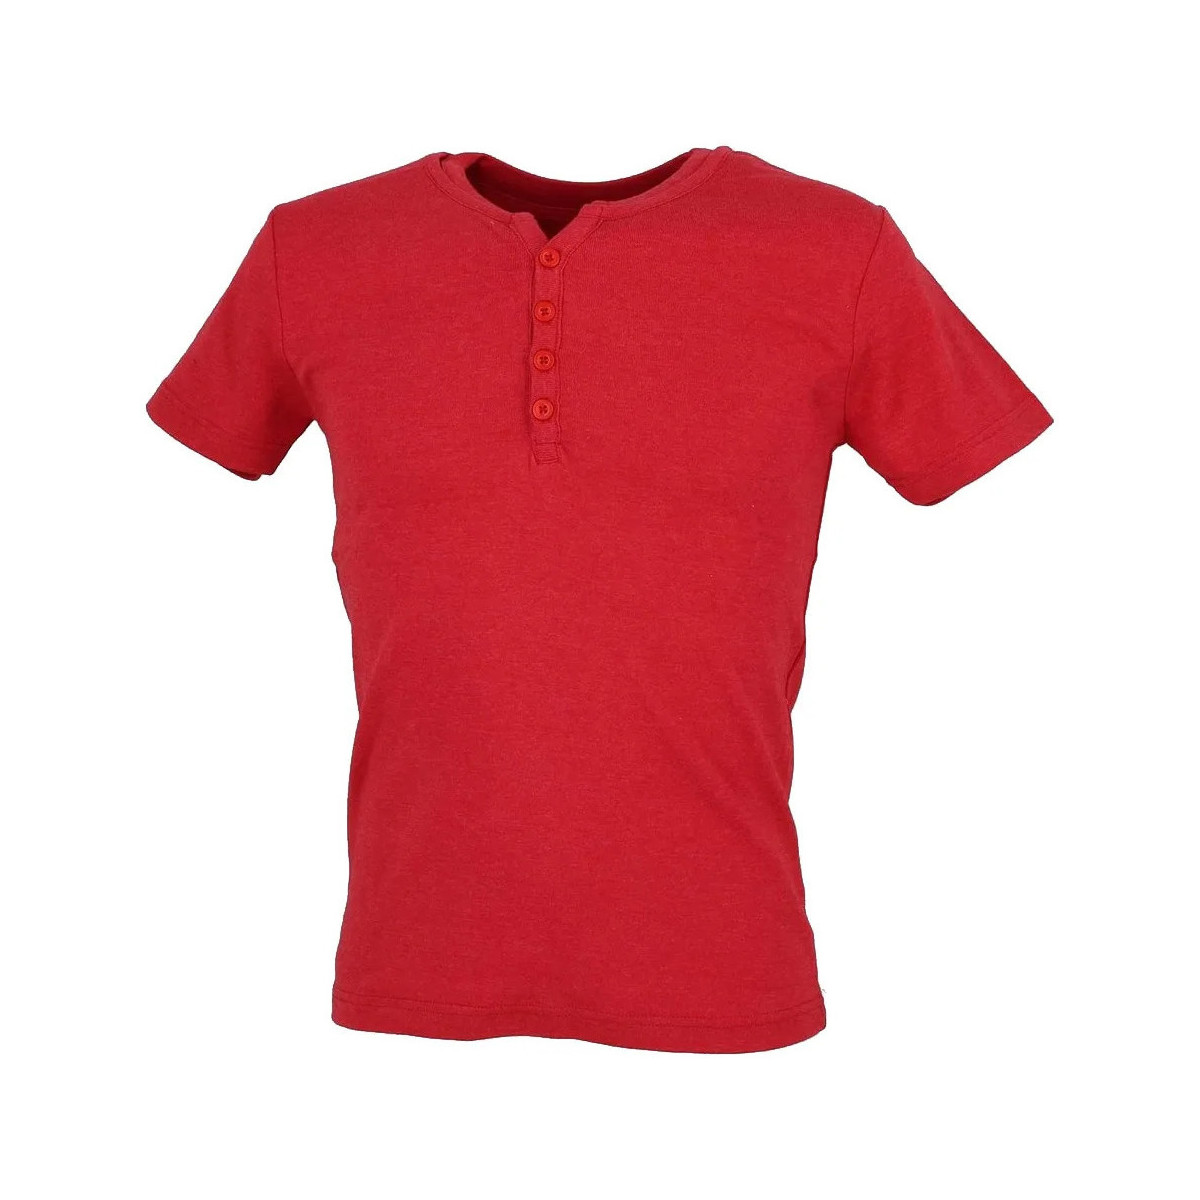 Kleidung Herren T-Shirts La Maison Blaggio MB-THEO Rot